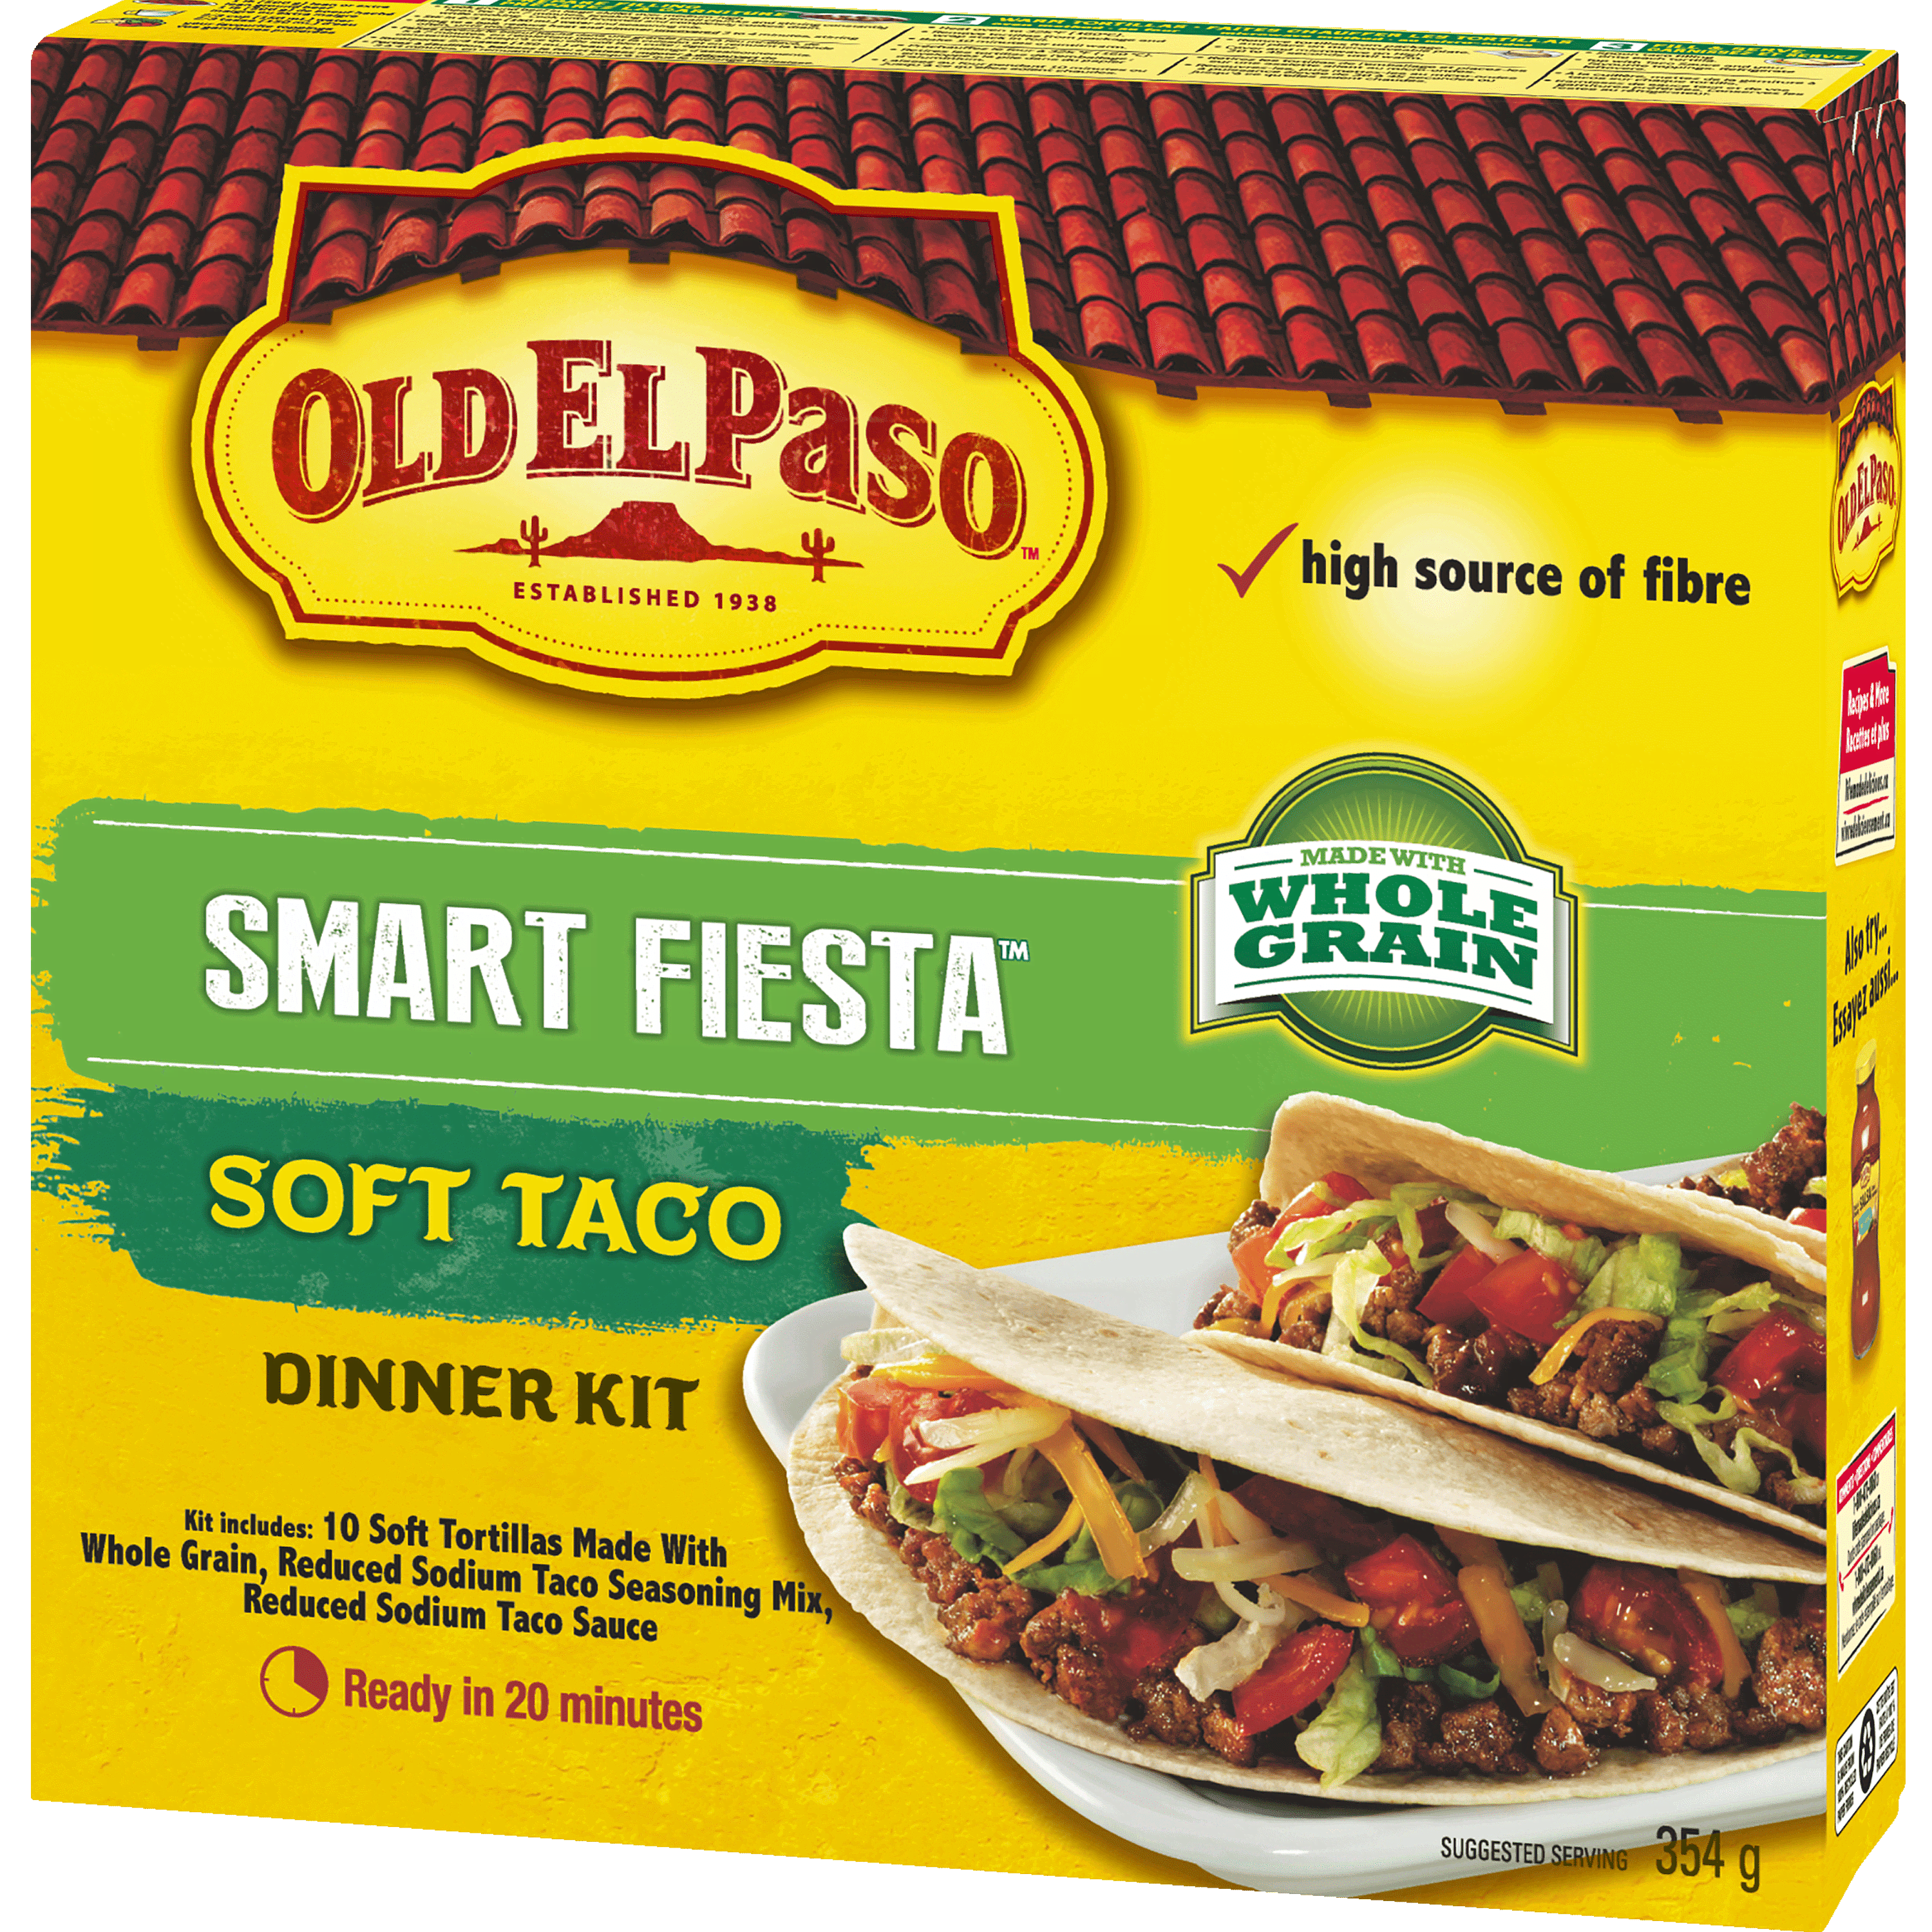 Smart Fiesta Soft Taco Dinner Kit - Old El Paso